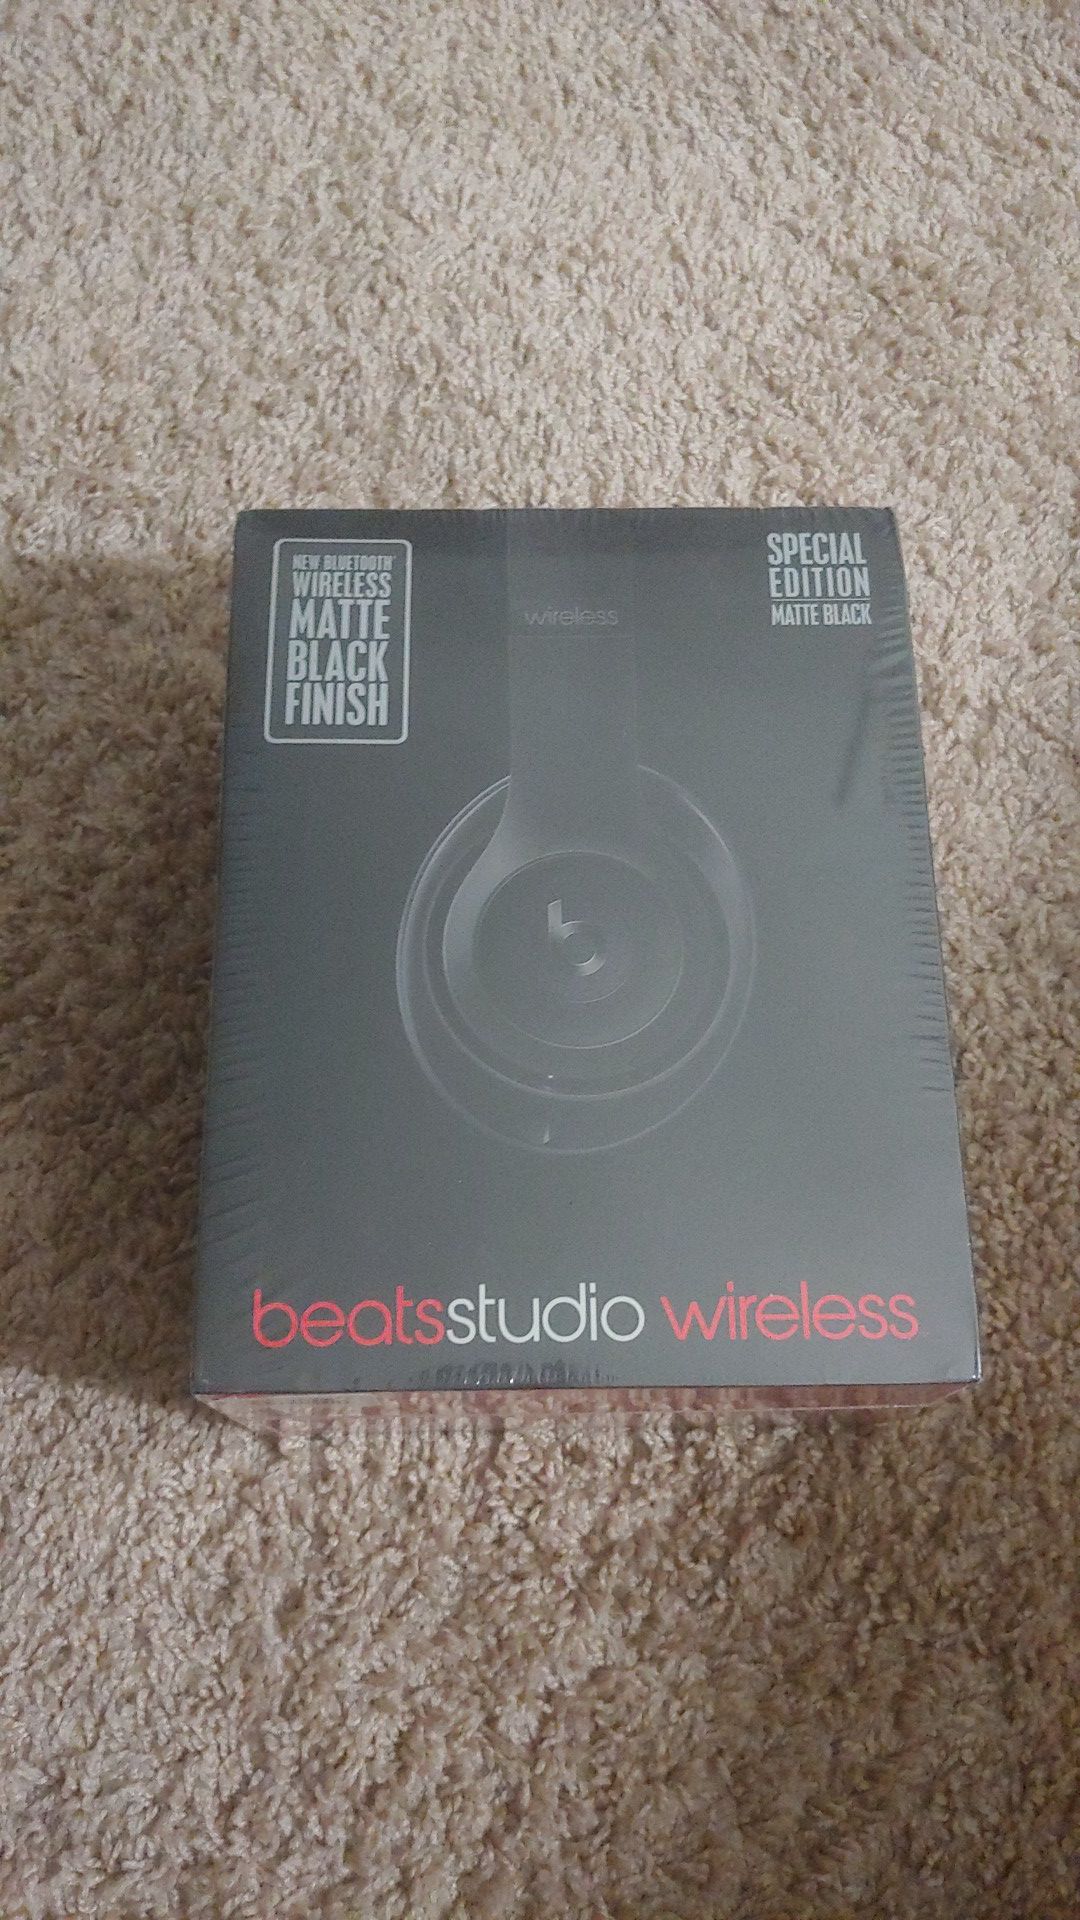 Beats Studio Wireless Headphones "Special Edition"